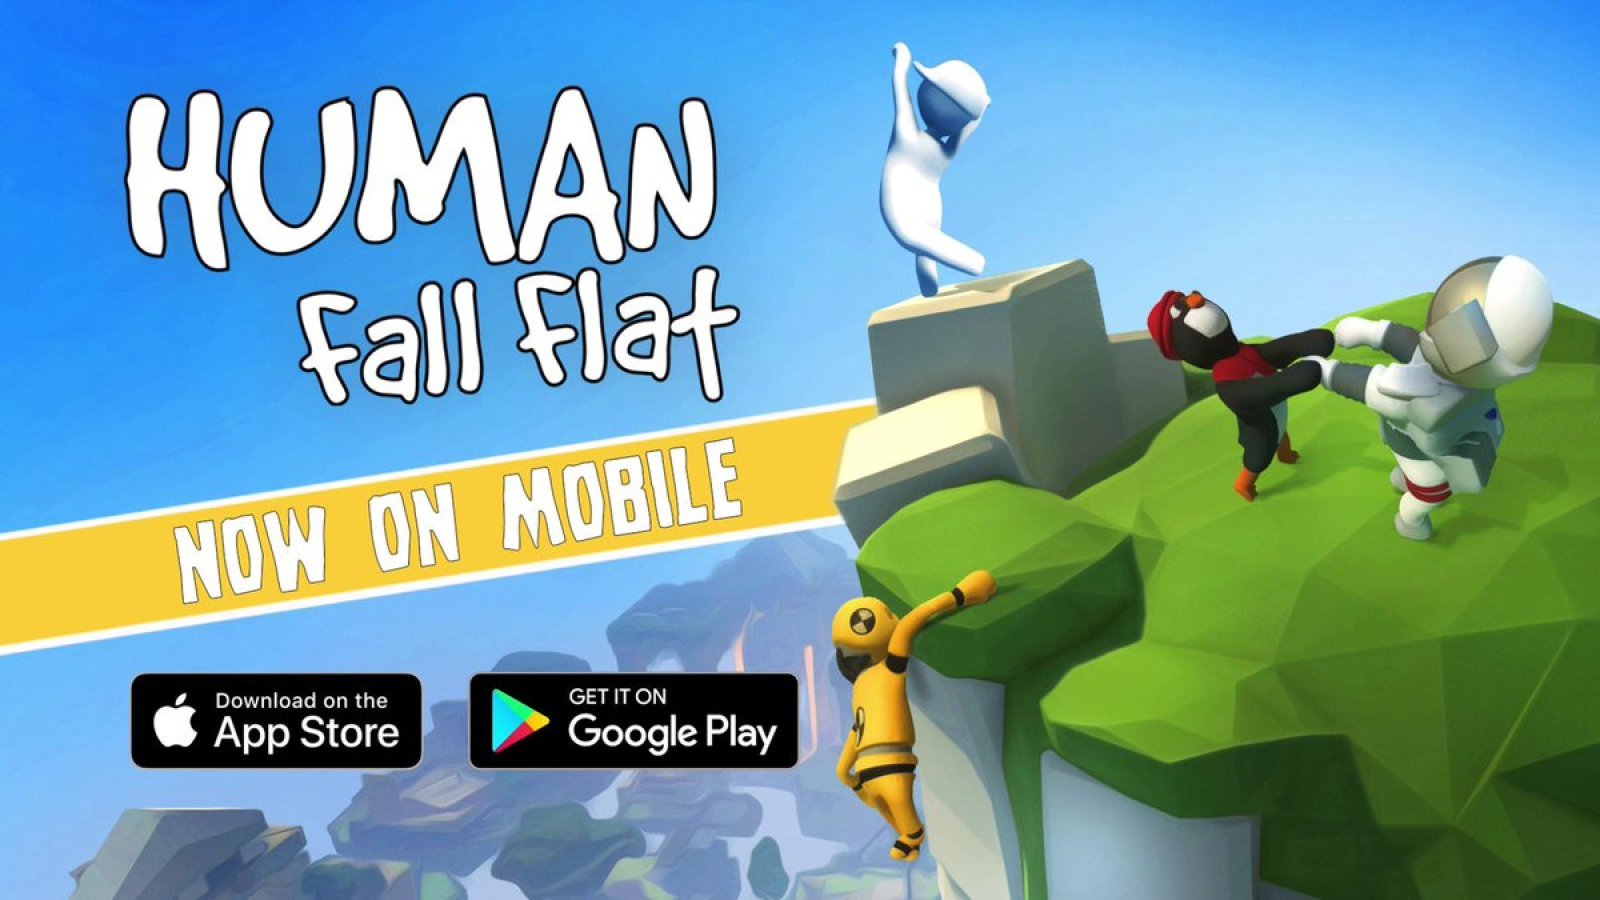 Human Fall Flat เกมไร้กระดูกสุดฮา เตรียมเปิดให้ไขปริศนาฝ่าฟันอุปสรรคสุดโหดแล้วบน iOS และ Android